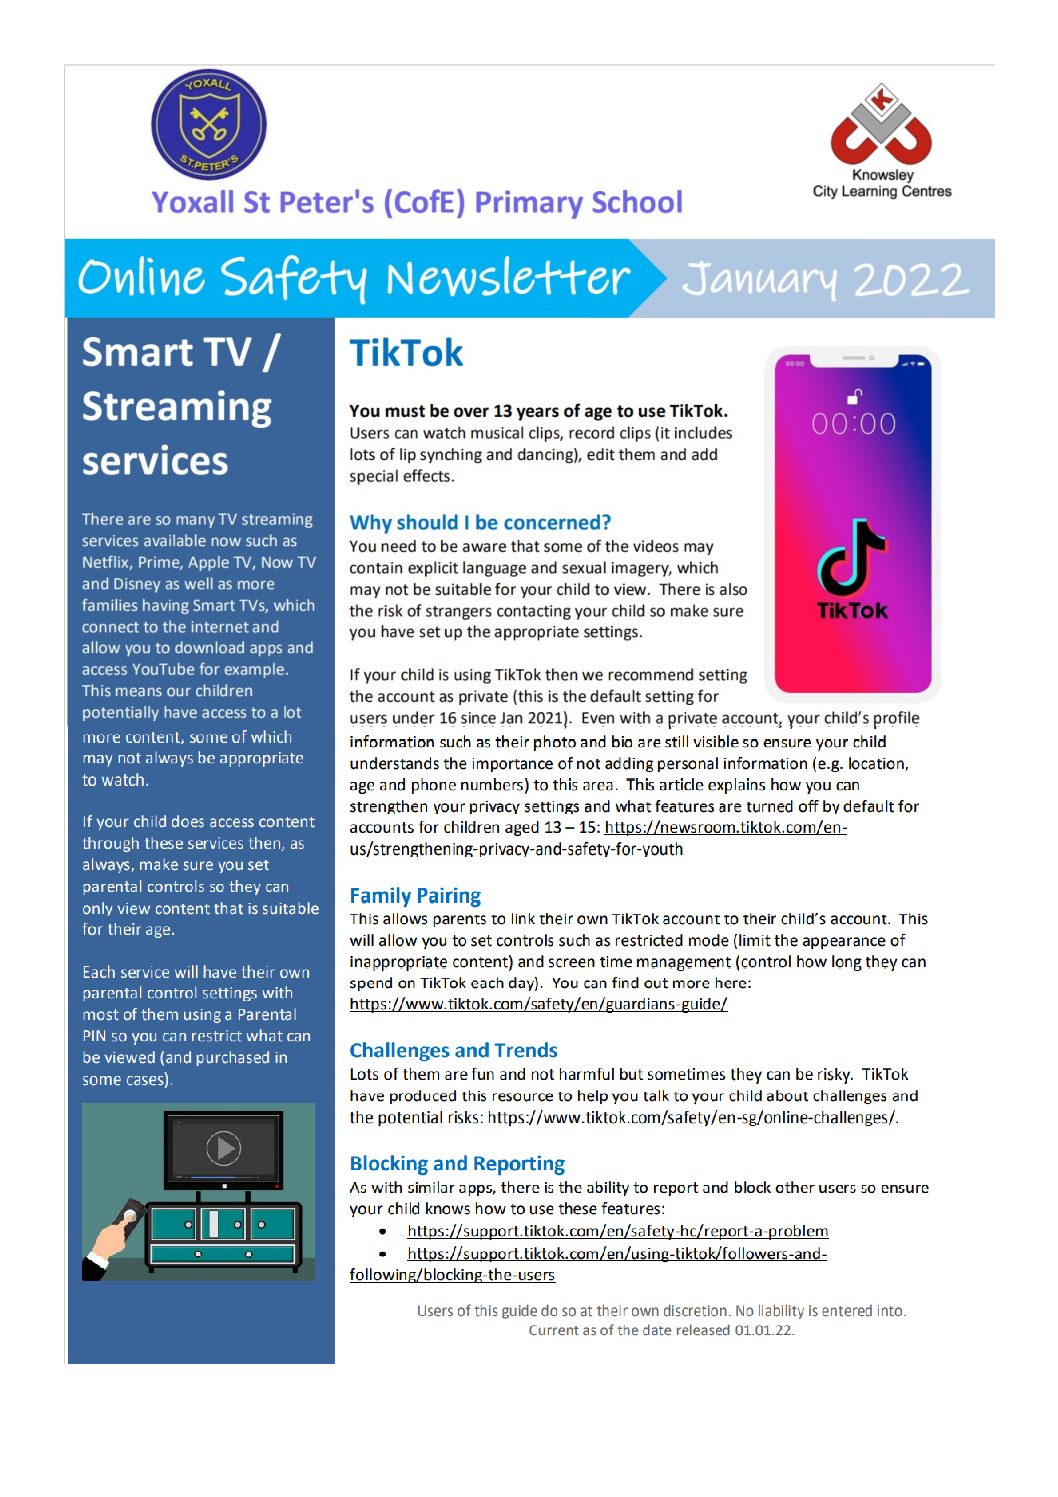 Online Safety Newsletter January 2022